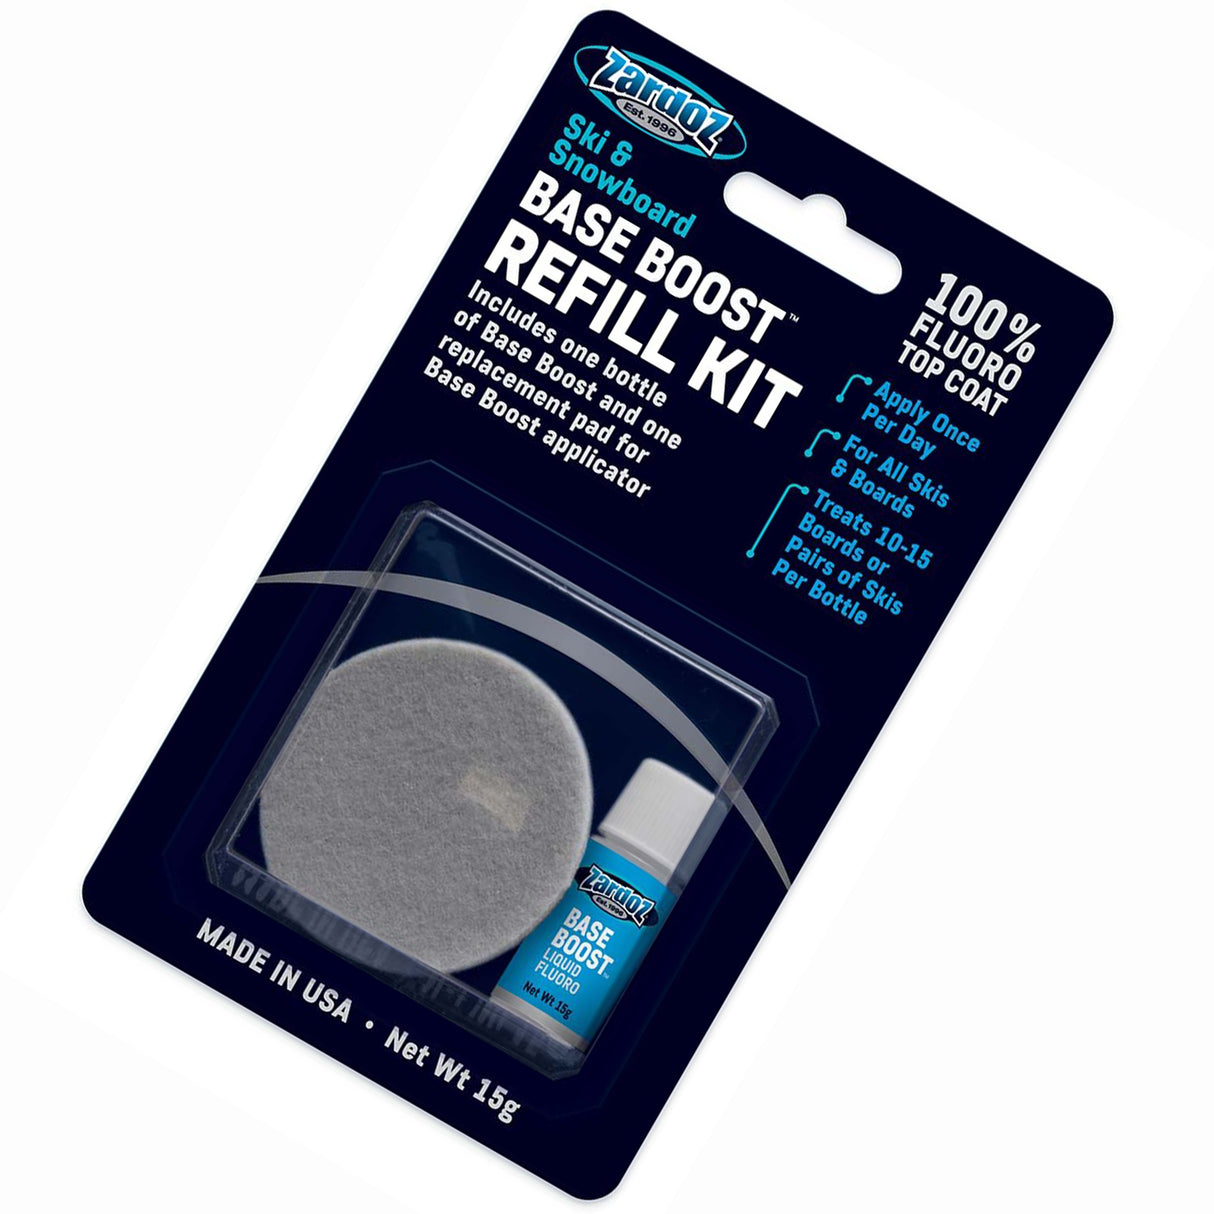 Base Boost Refill Kit